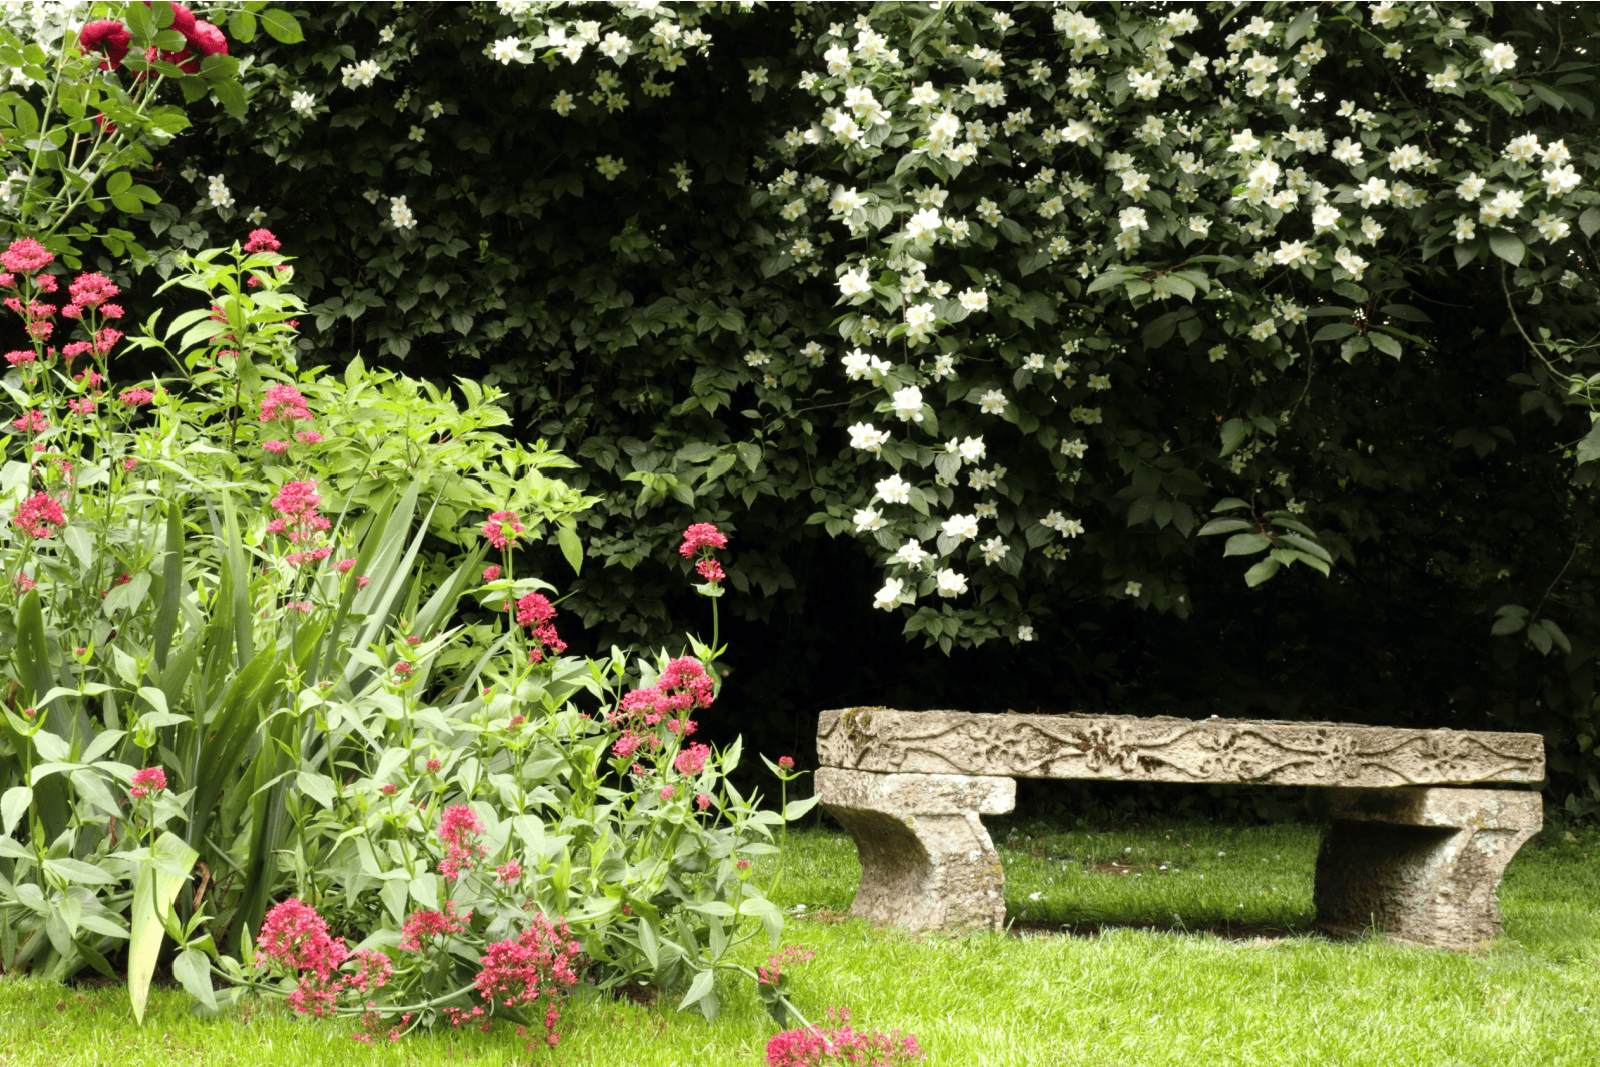 Ornamental stone bench under fragrant, white flowering jasmine bush